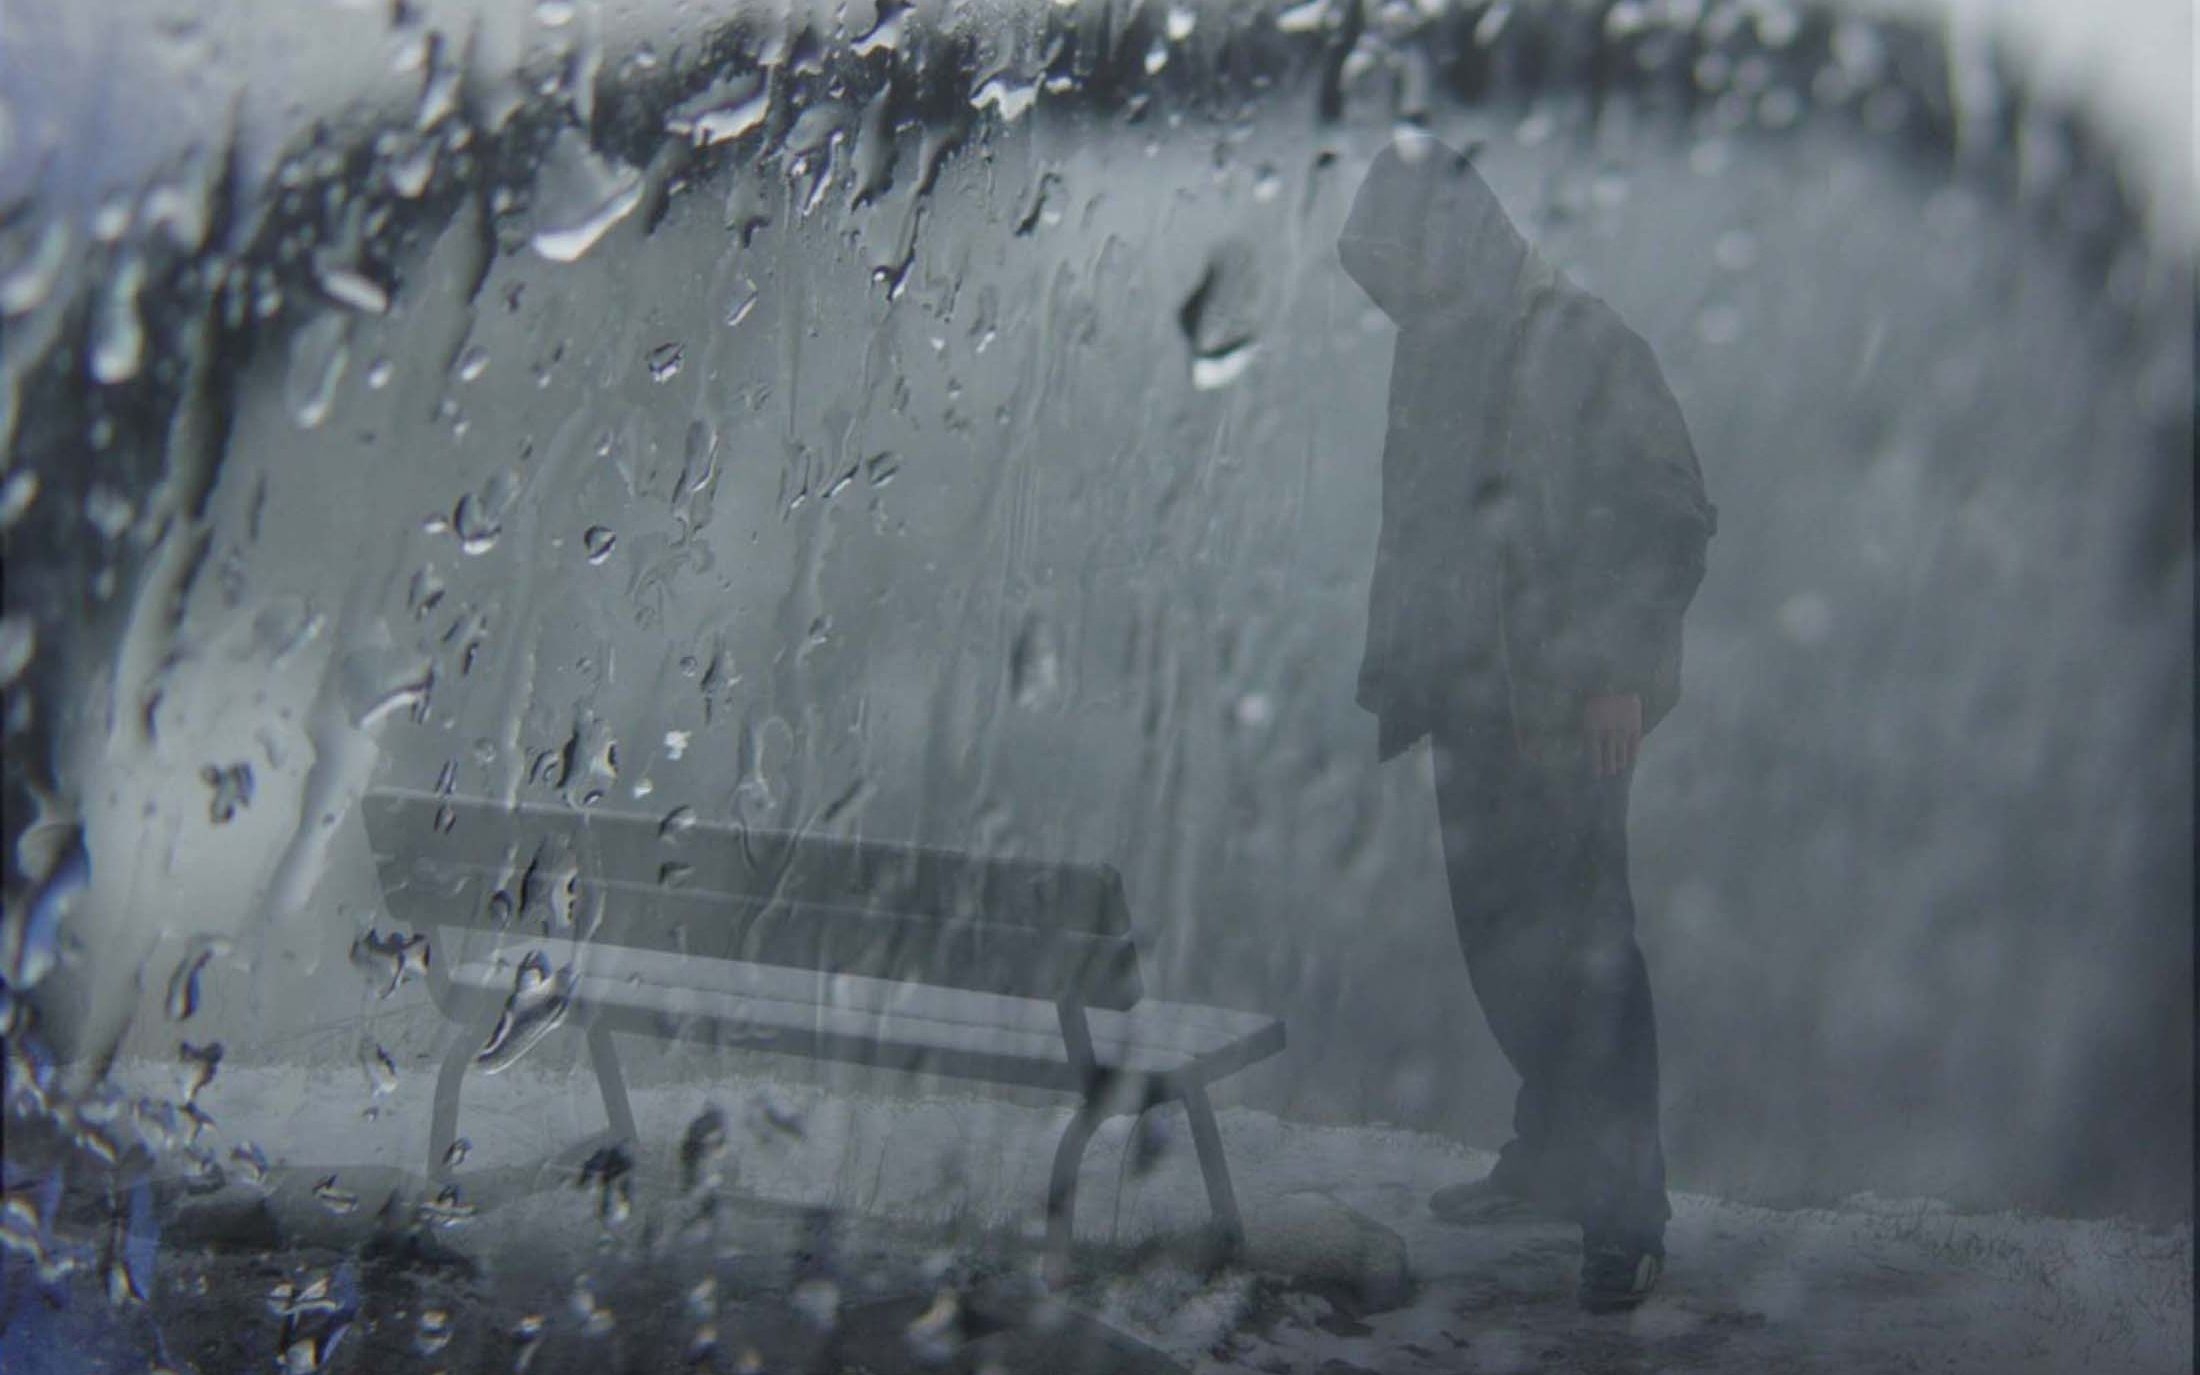 Дождь без перерыва. Одинокий мужчина под дождем. Человек под дождем. Одинокий парень под дождем. Человек идет под дождем.